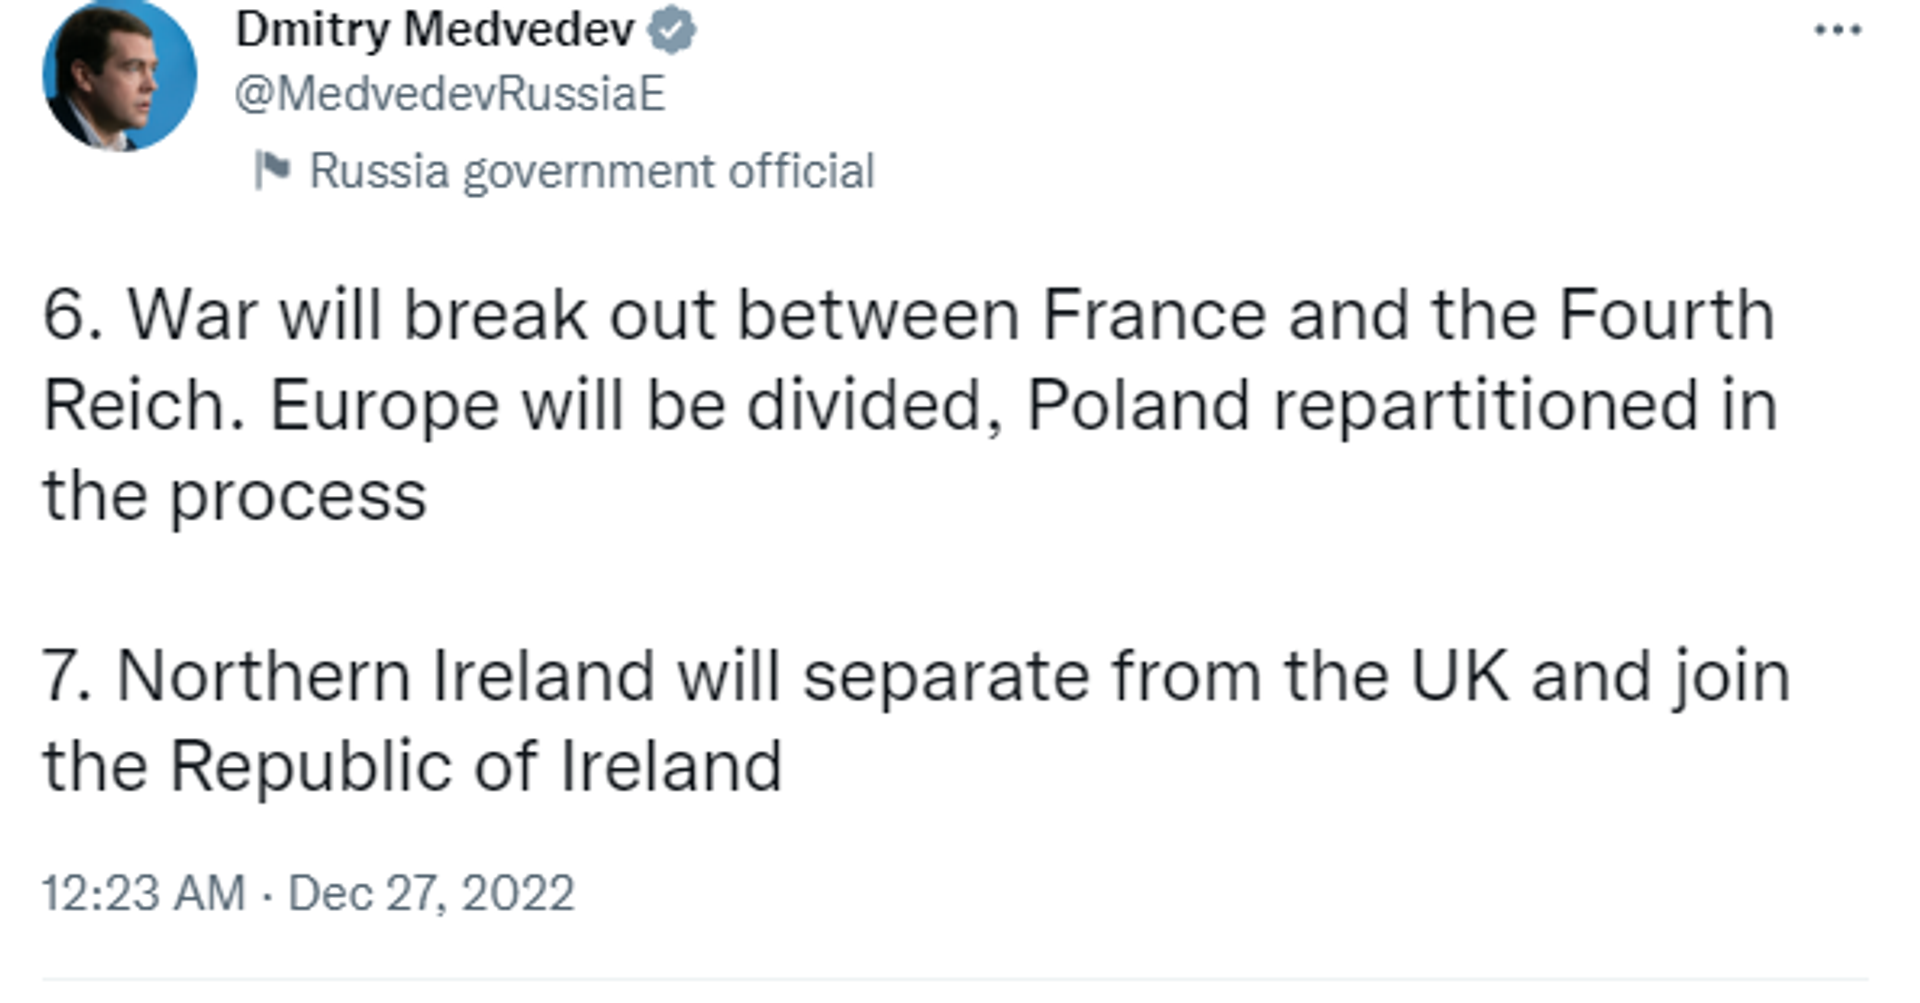 Twitter screenshot of a post by Dmitry Medvedev, Deputy Chairman of the Russian Security Council. - Sputnik International, 1920, 27.12.2022